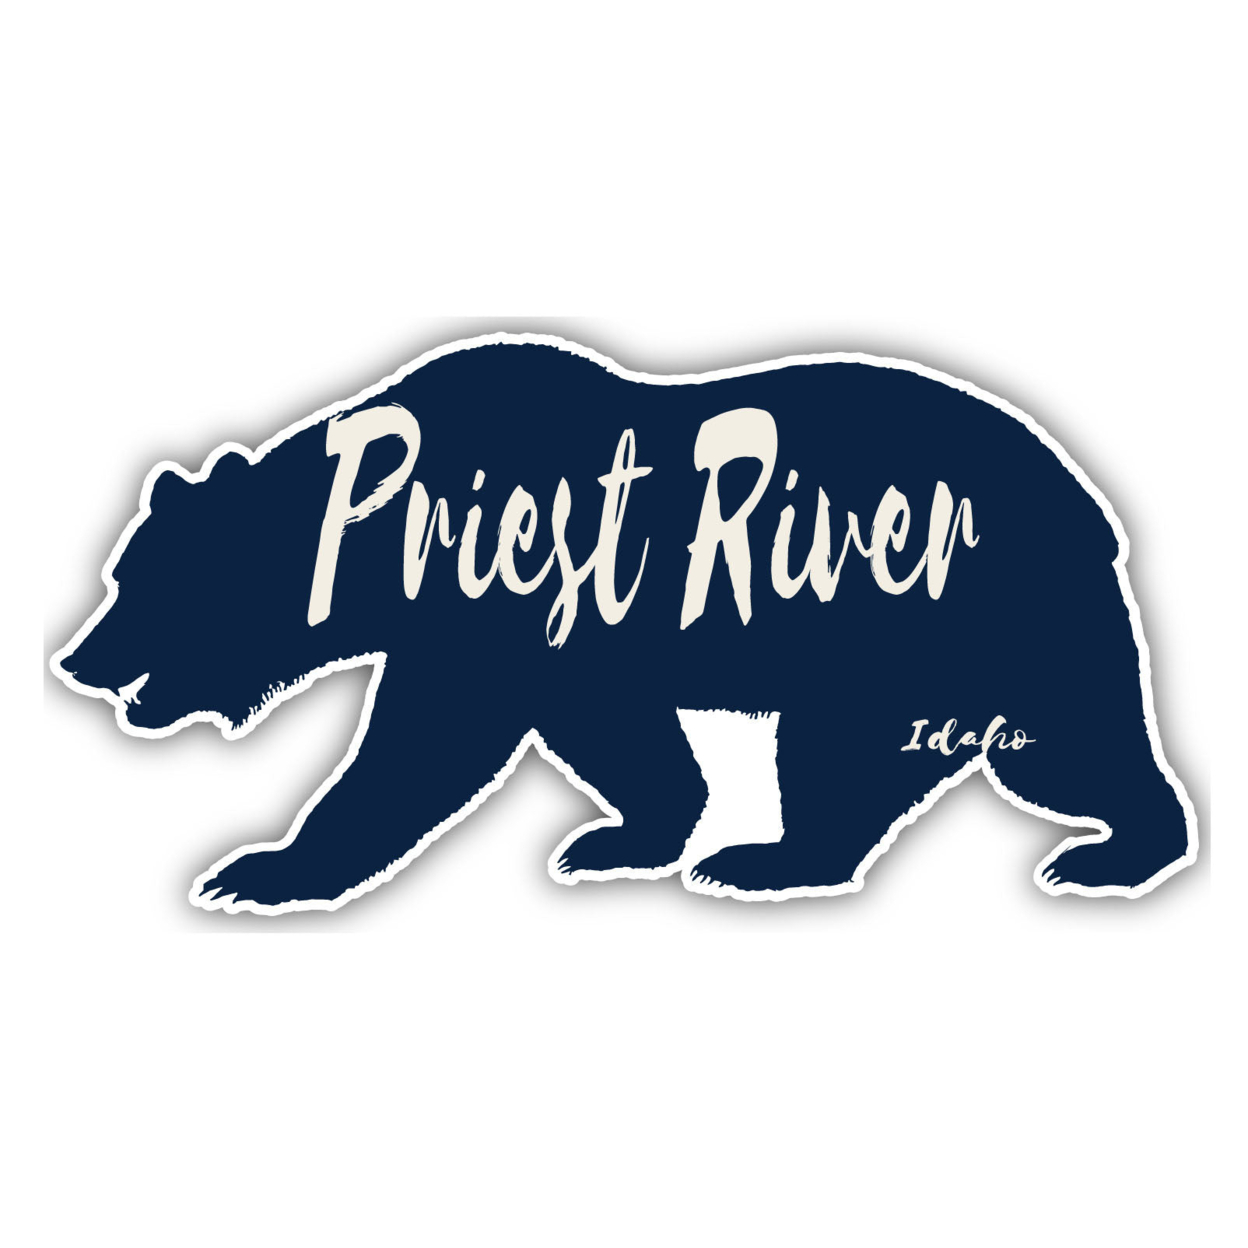 Priest River Idaho Souvenir Decorative Stickers (Choose Theme And Size) - Single Unit, 4-Inch, Camp Life